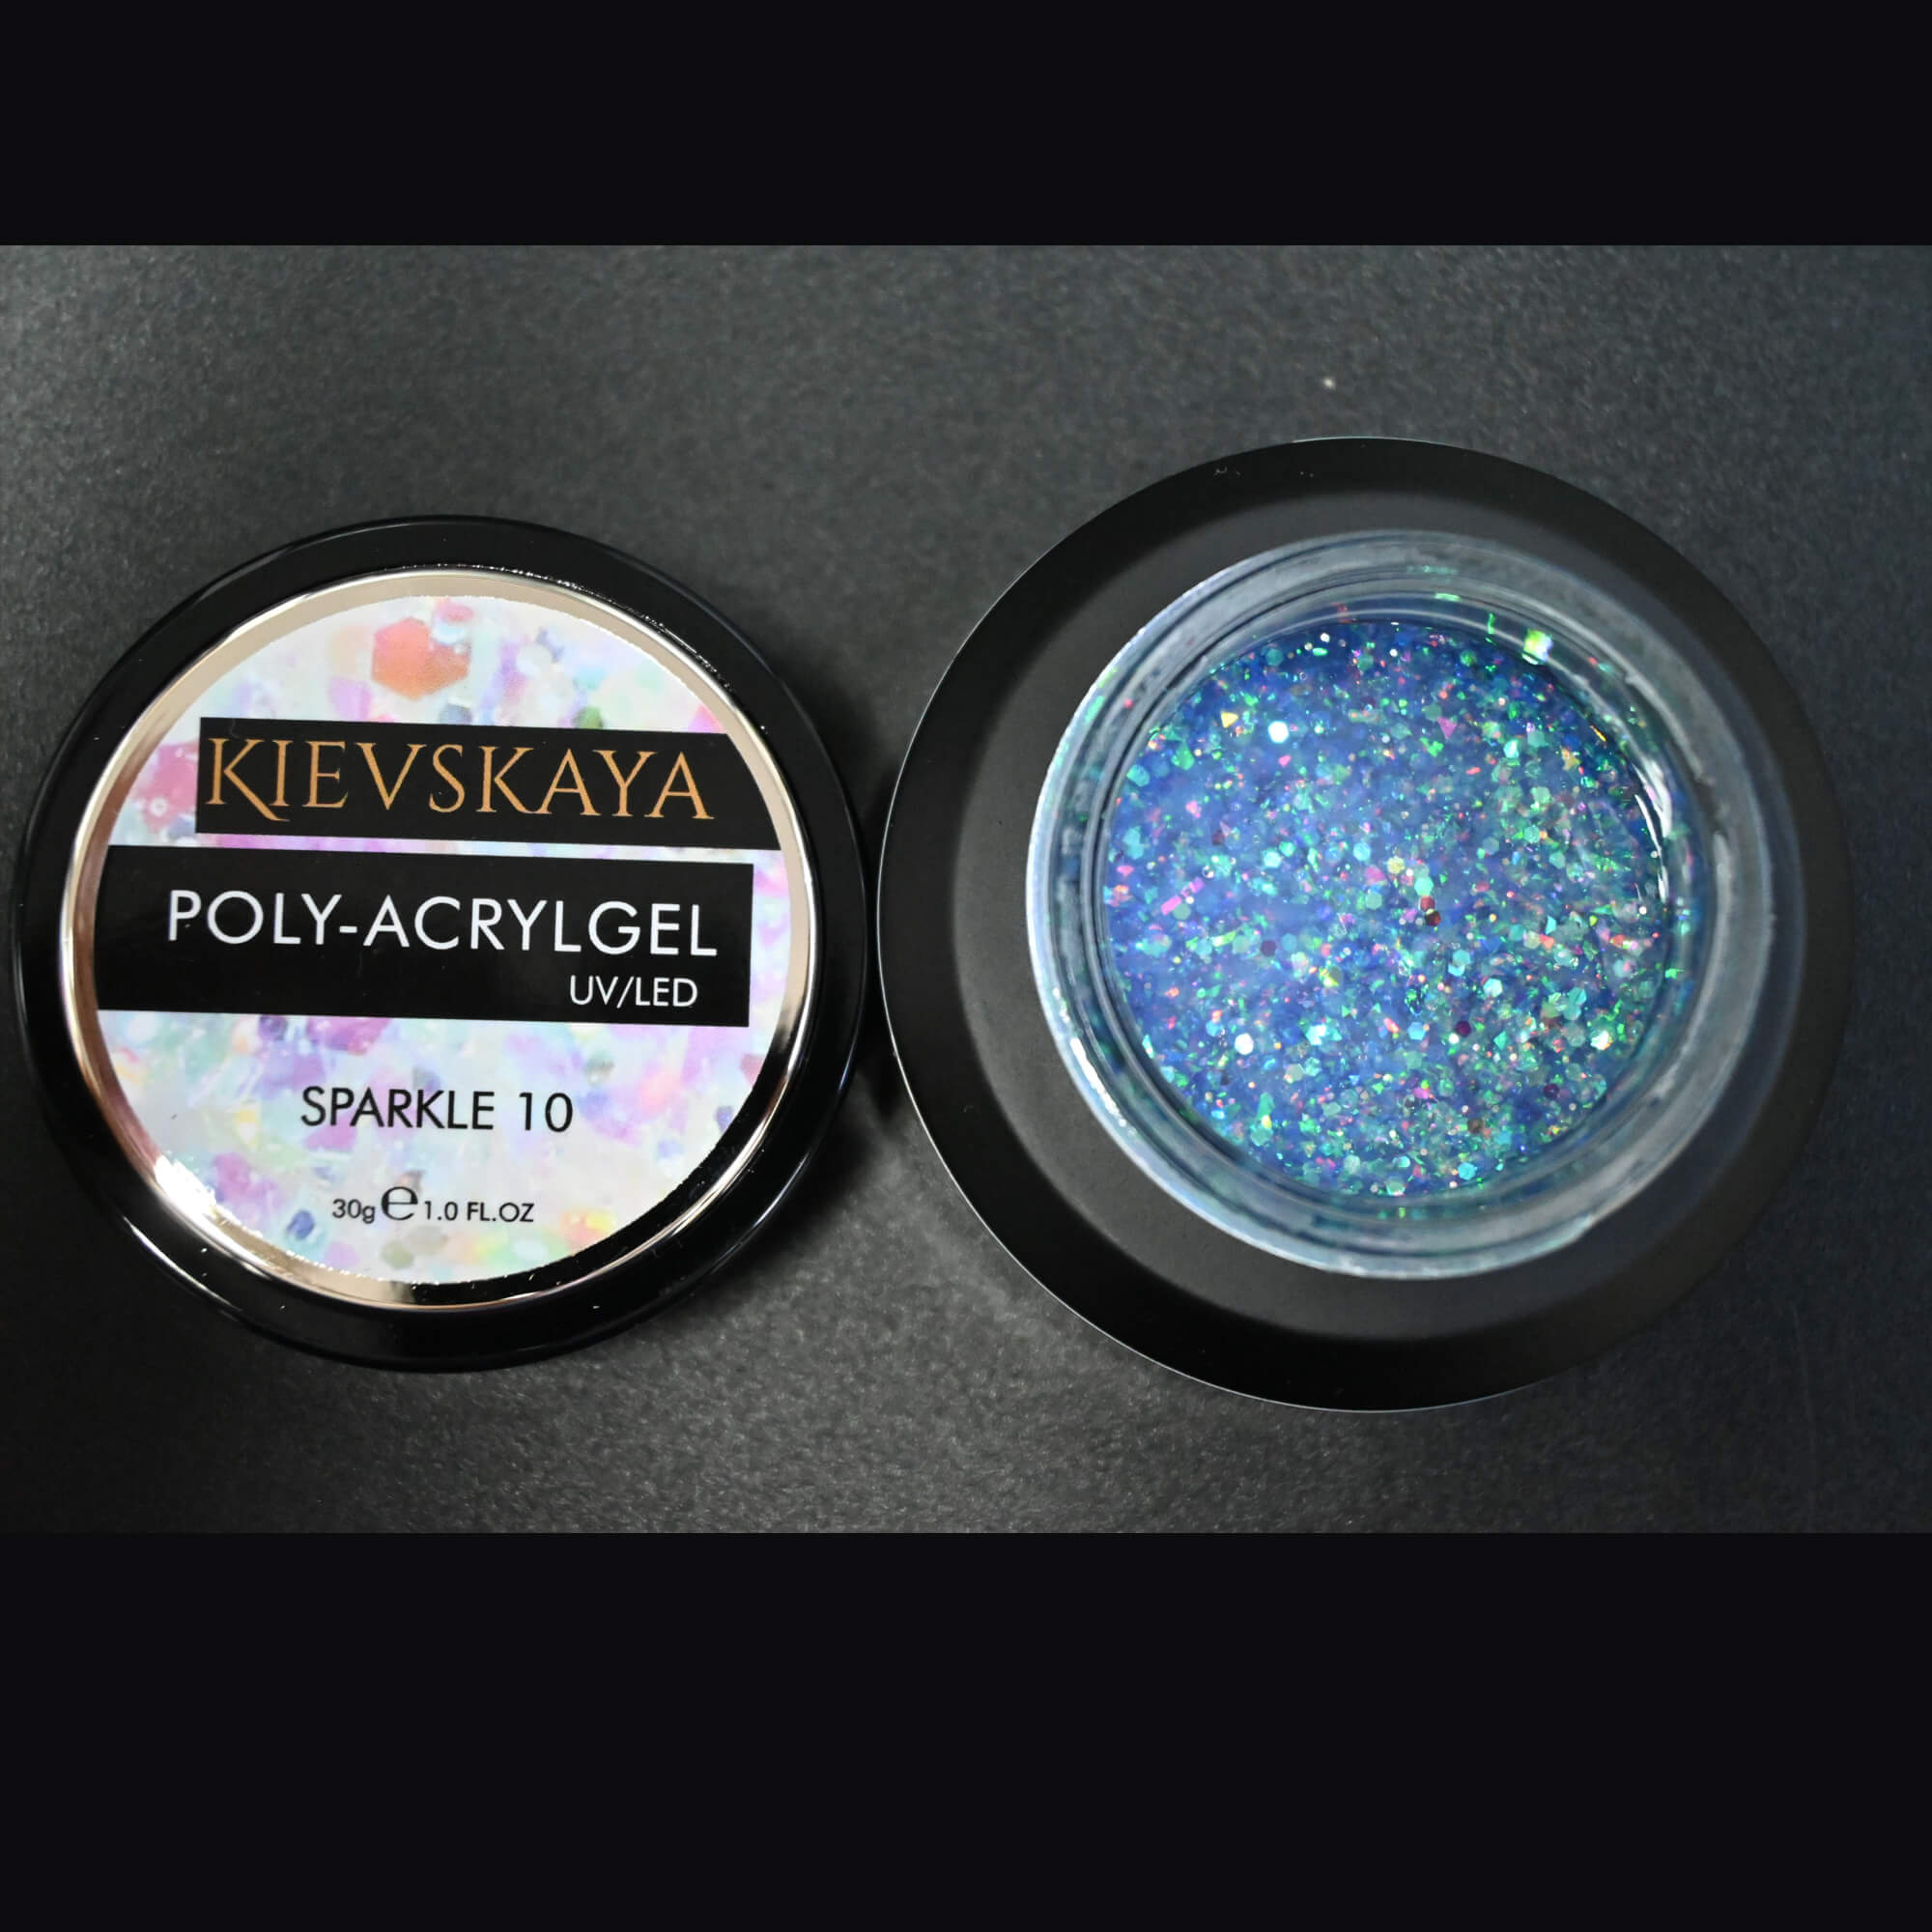 Poly-acrylgel Sparkle Kievskaya 30gr-sparkle10 - Sparkle10 - Everin.ro